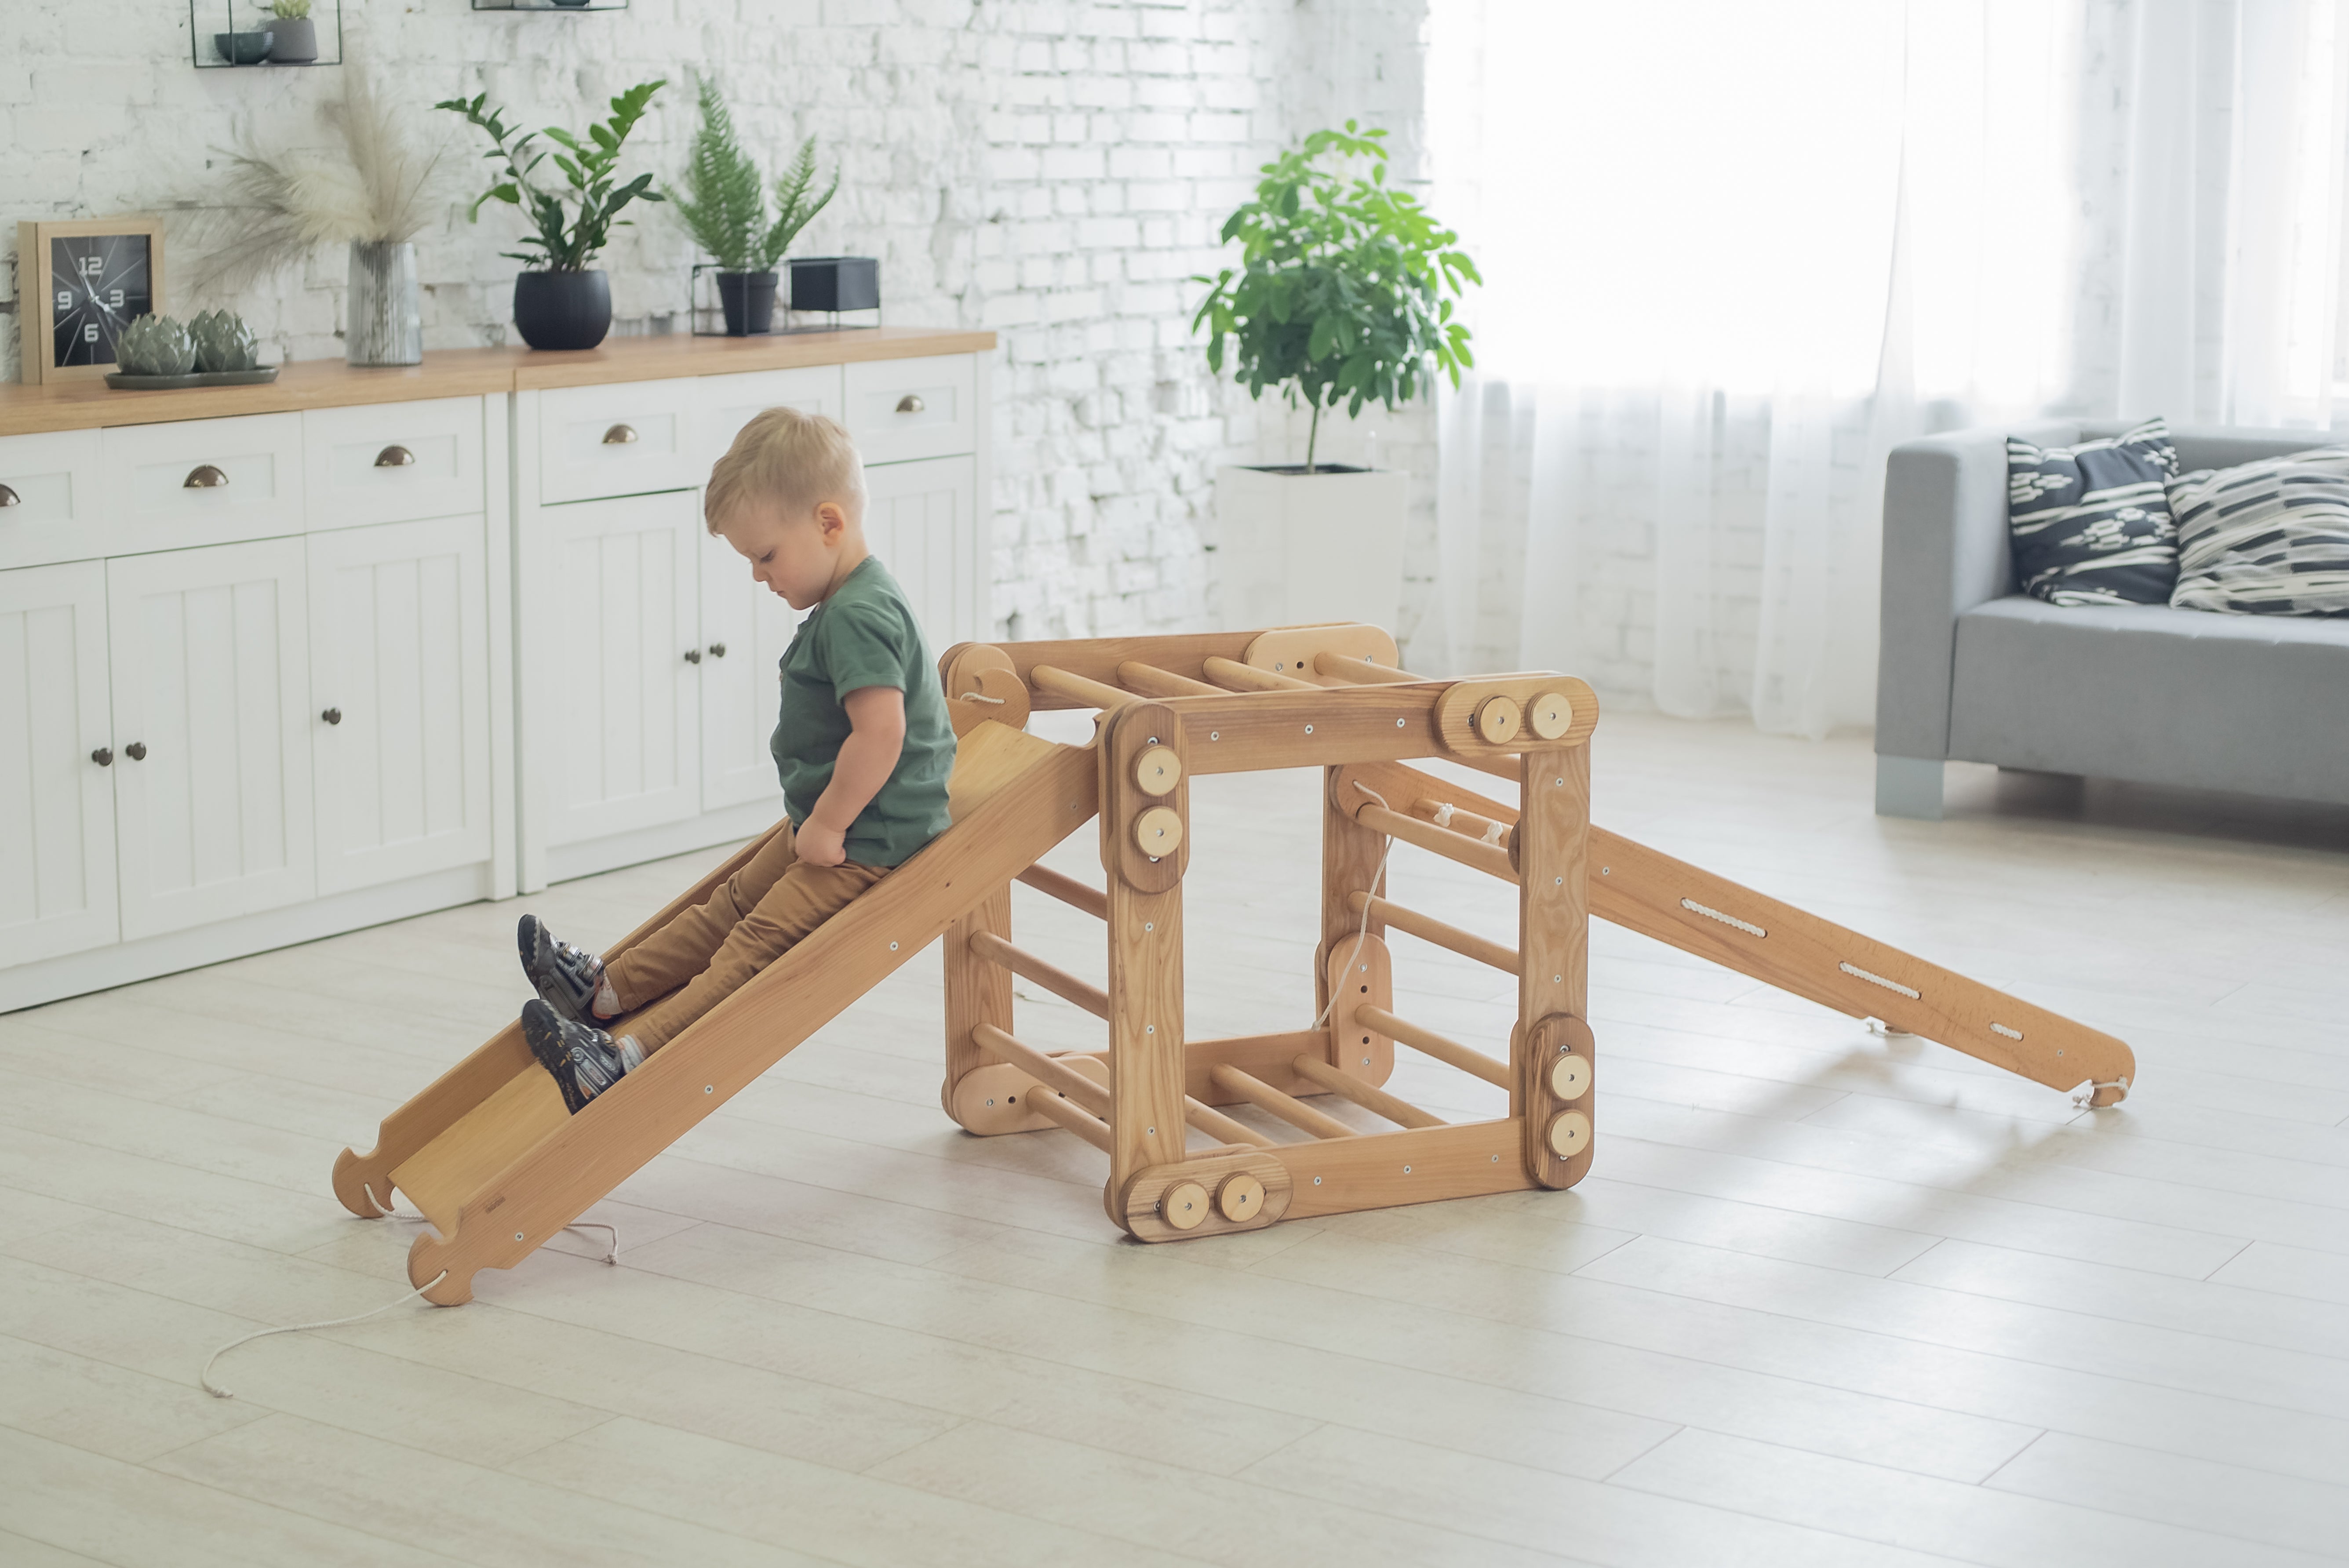 3-in-1 Montessori Climbing Frame Set: Snake Ladder + Slide Board/Ramp + Net – Beige